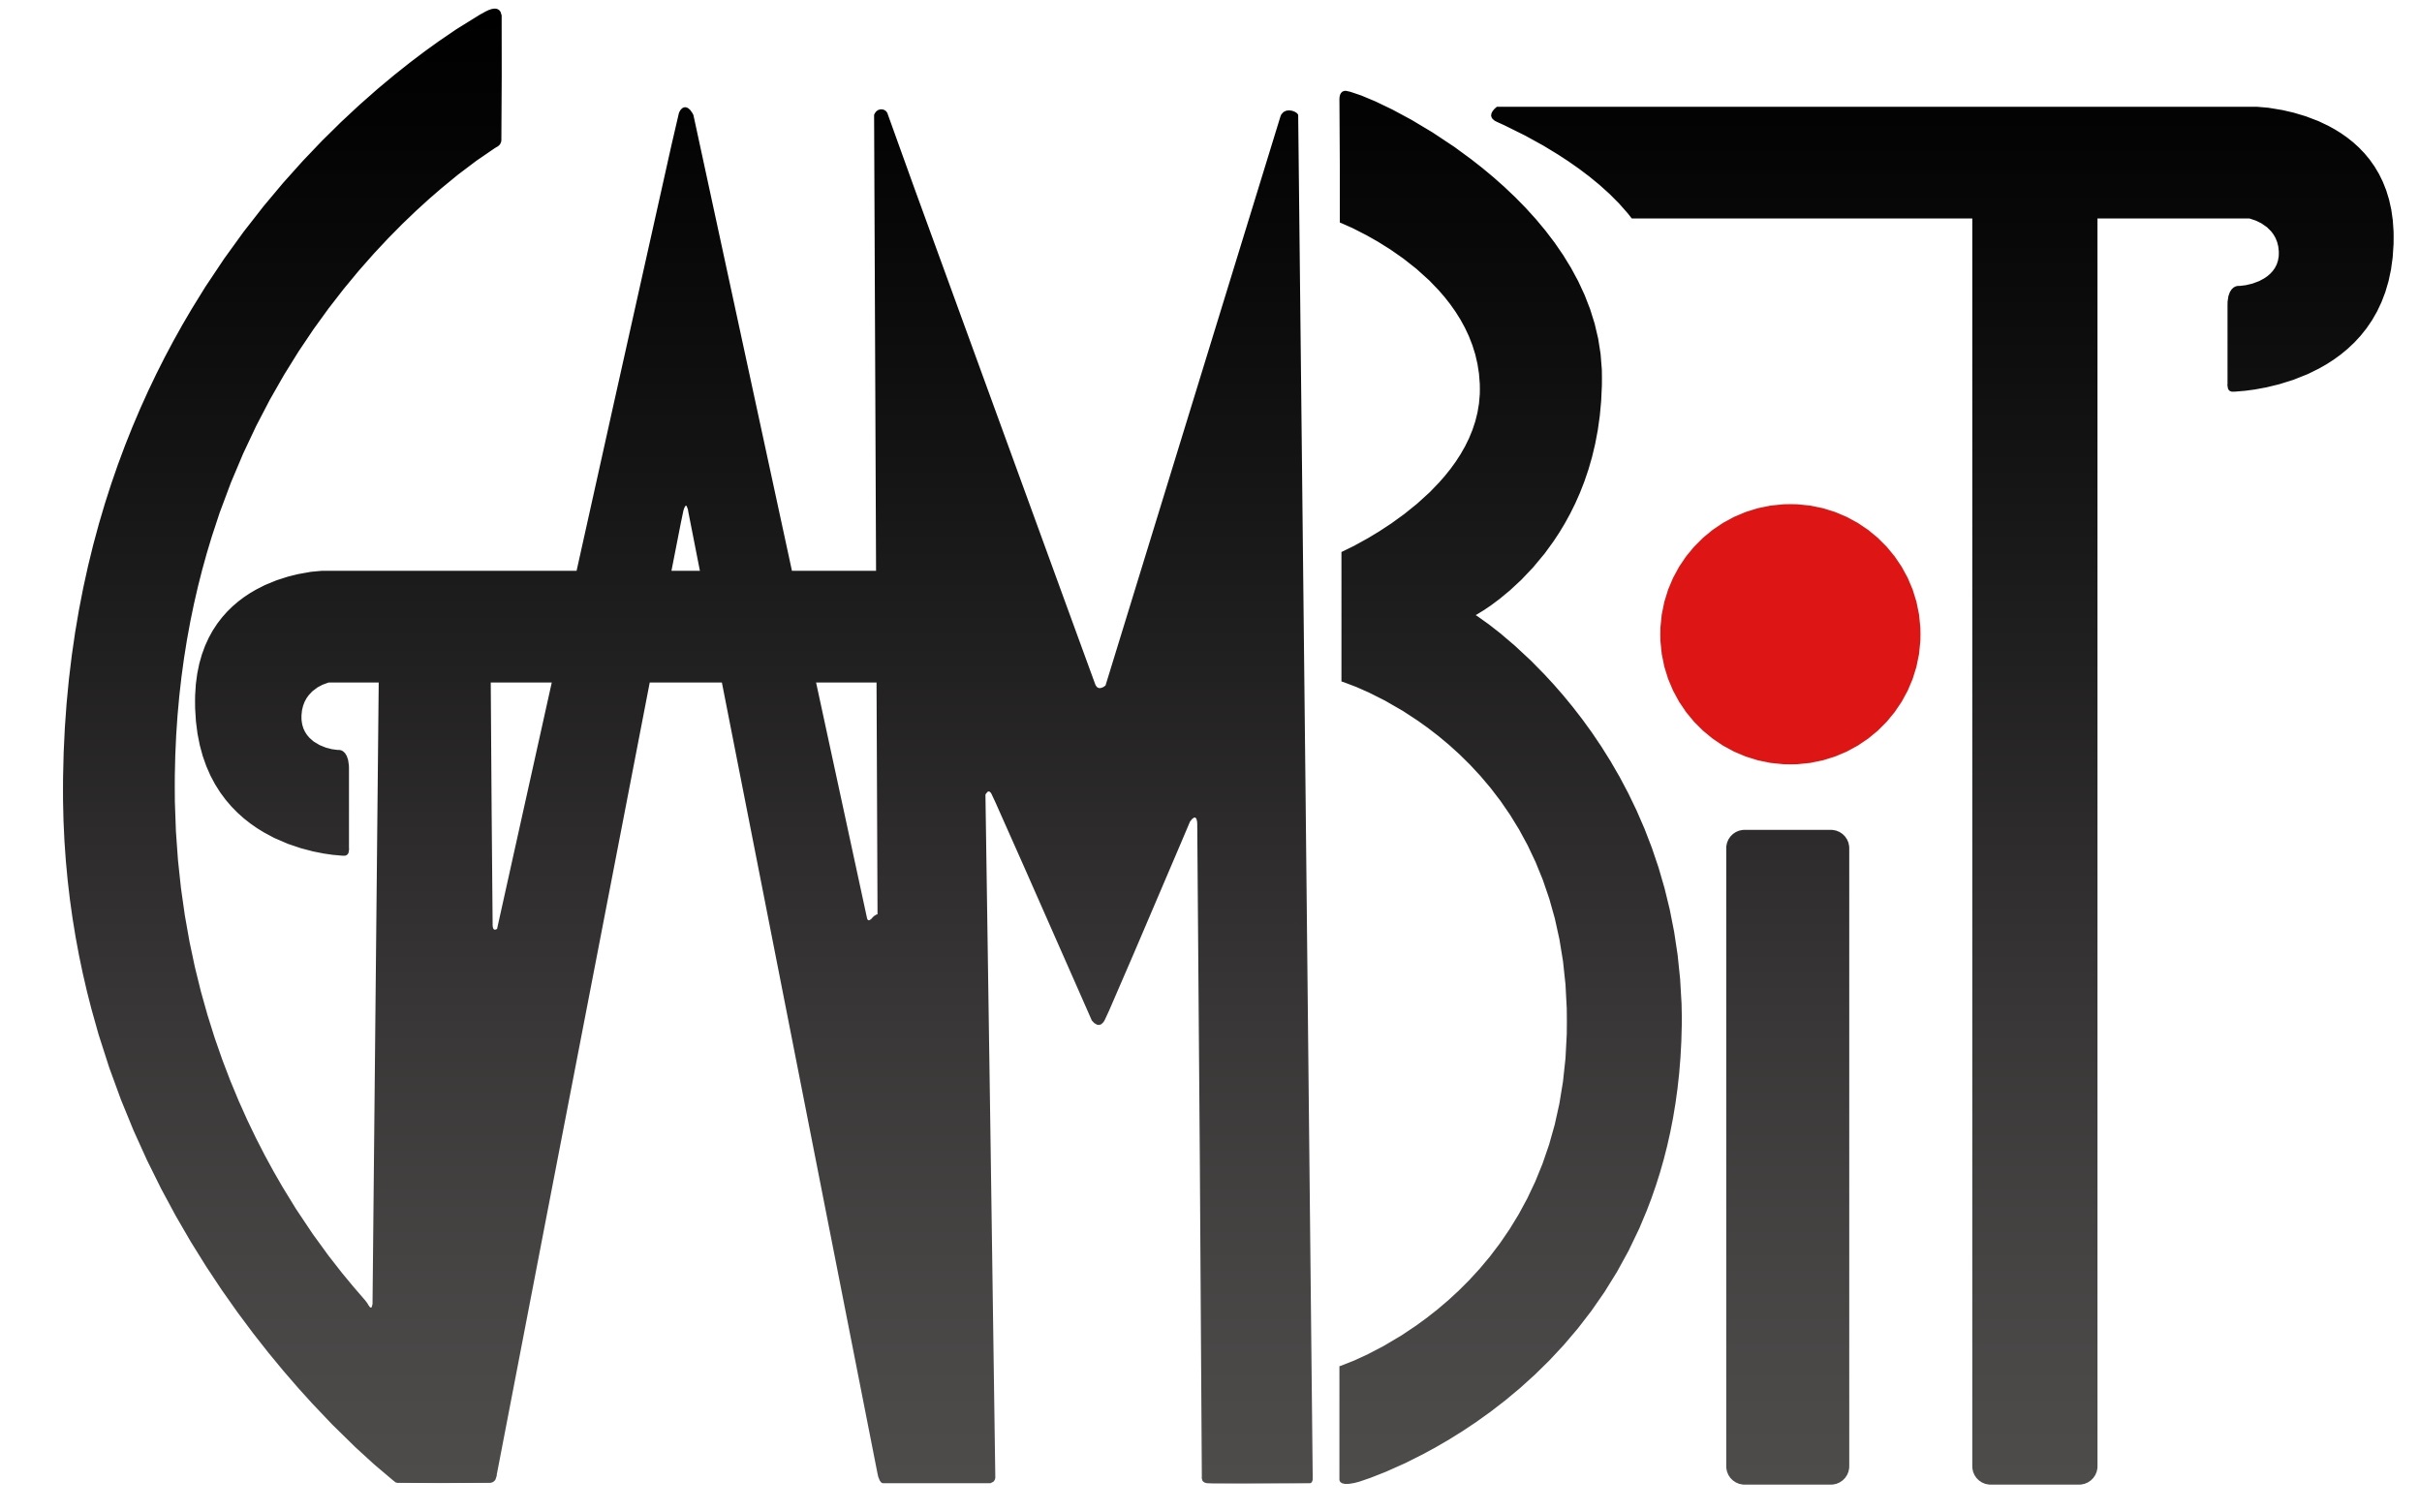 GAMBIT Logo.jpg e93c5072412880cc08ee0376ca835596